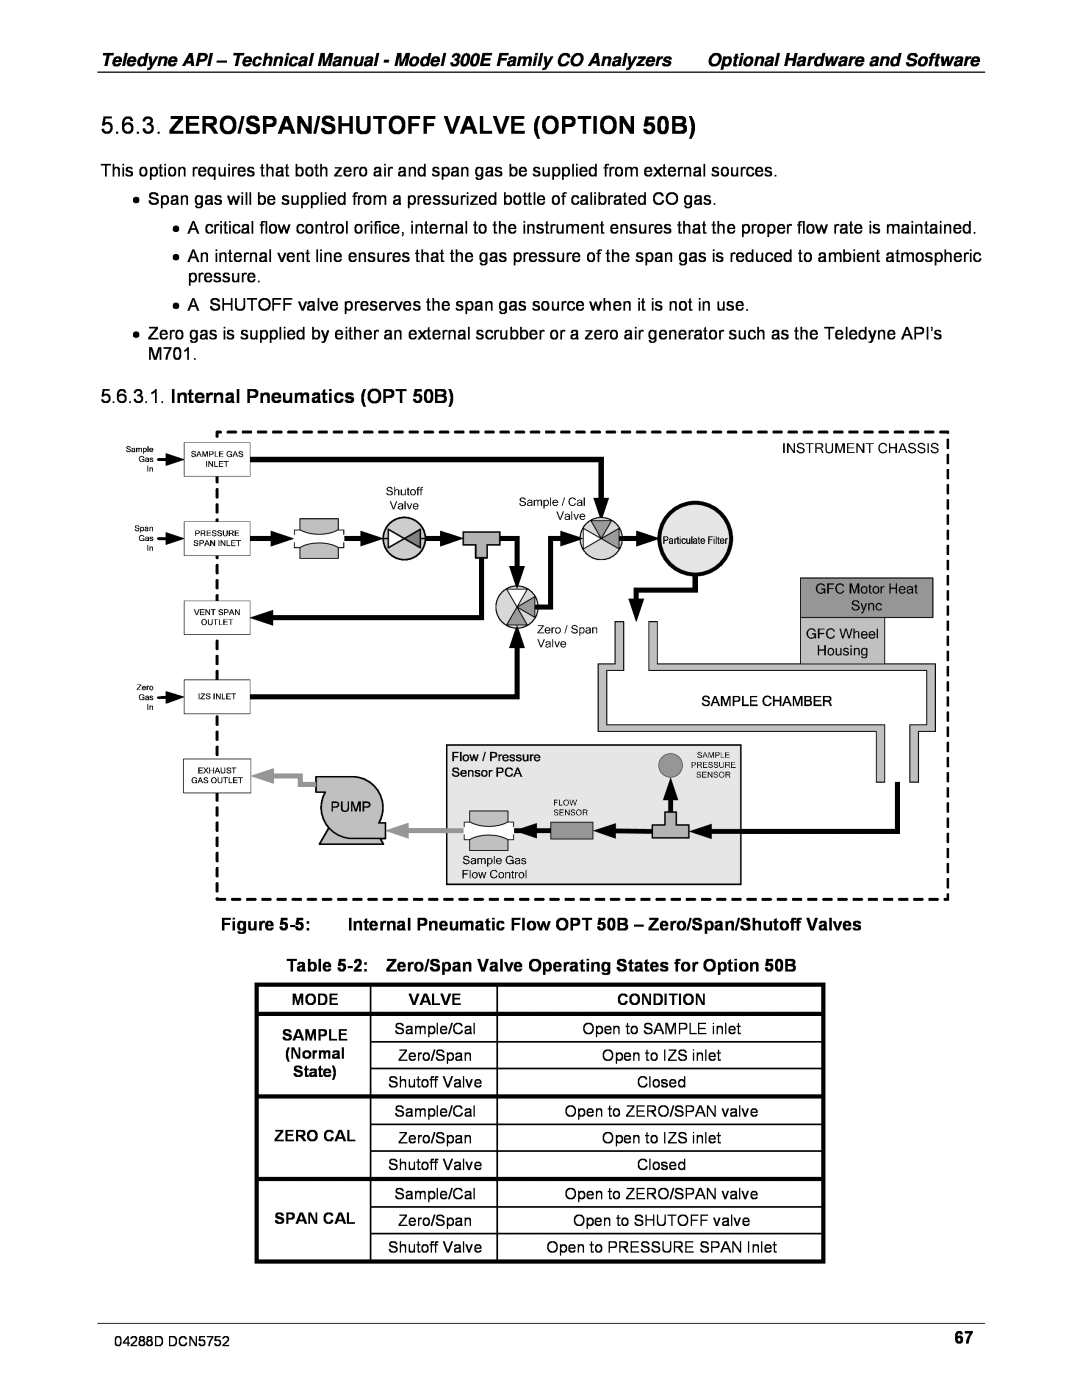 Teledyne M300EM operation manual ZERO/SPAN/SHUTOFF VALVE OPTION 50B, Internal Pneumatics OPT 50B, Figure 